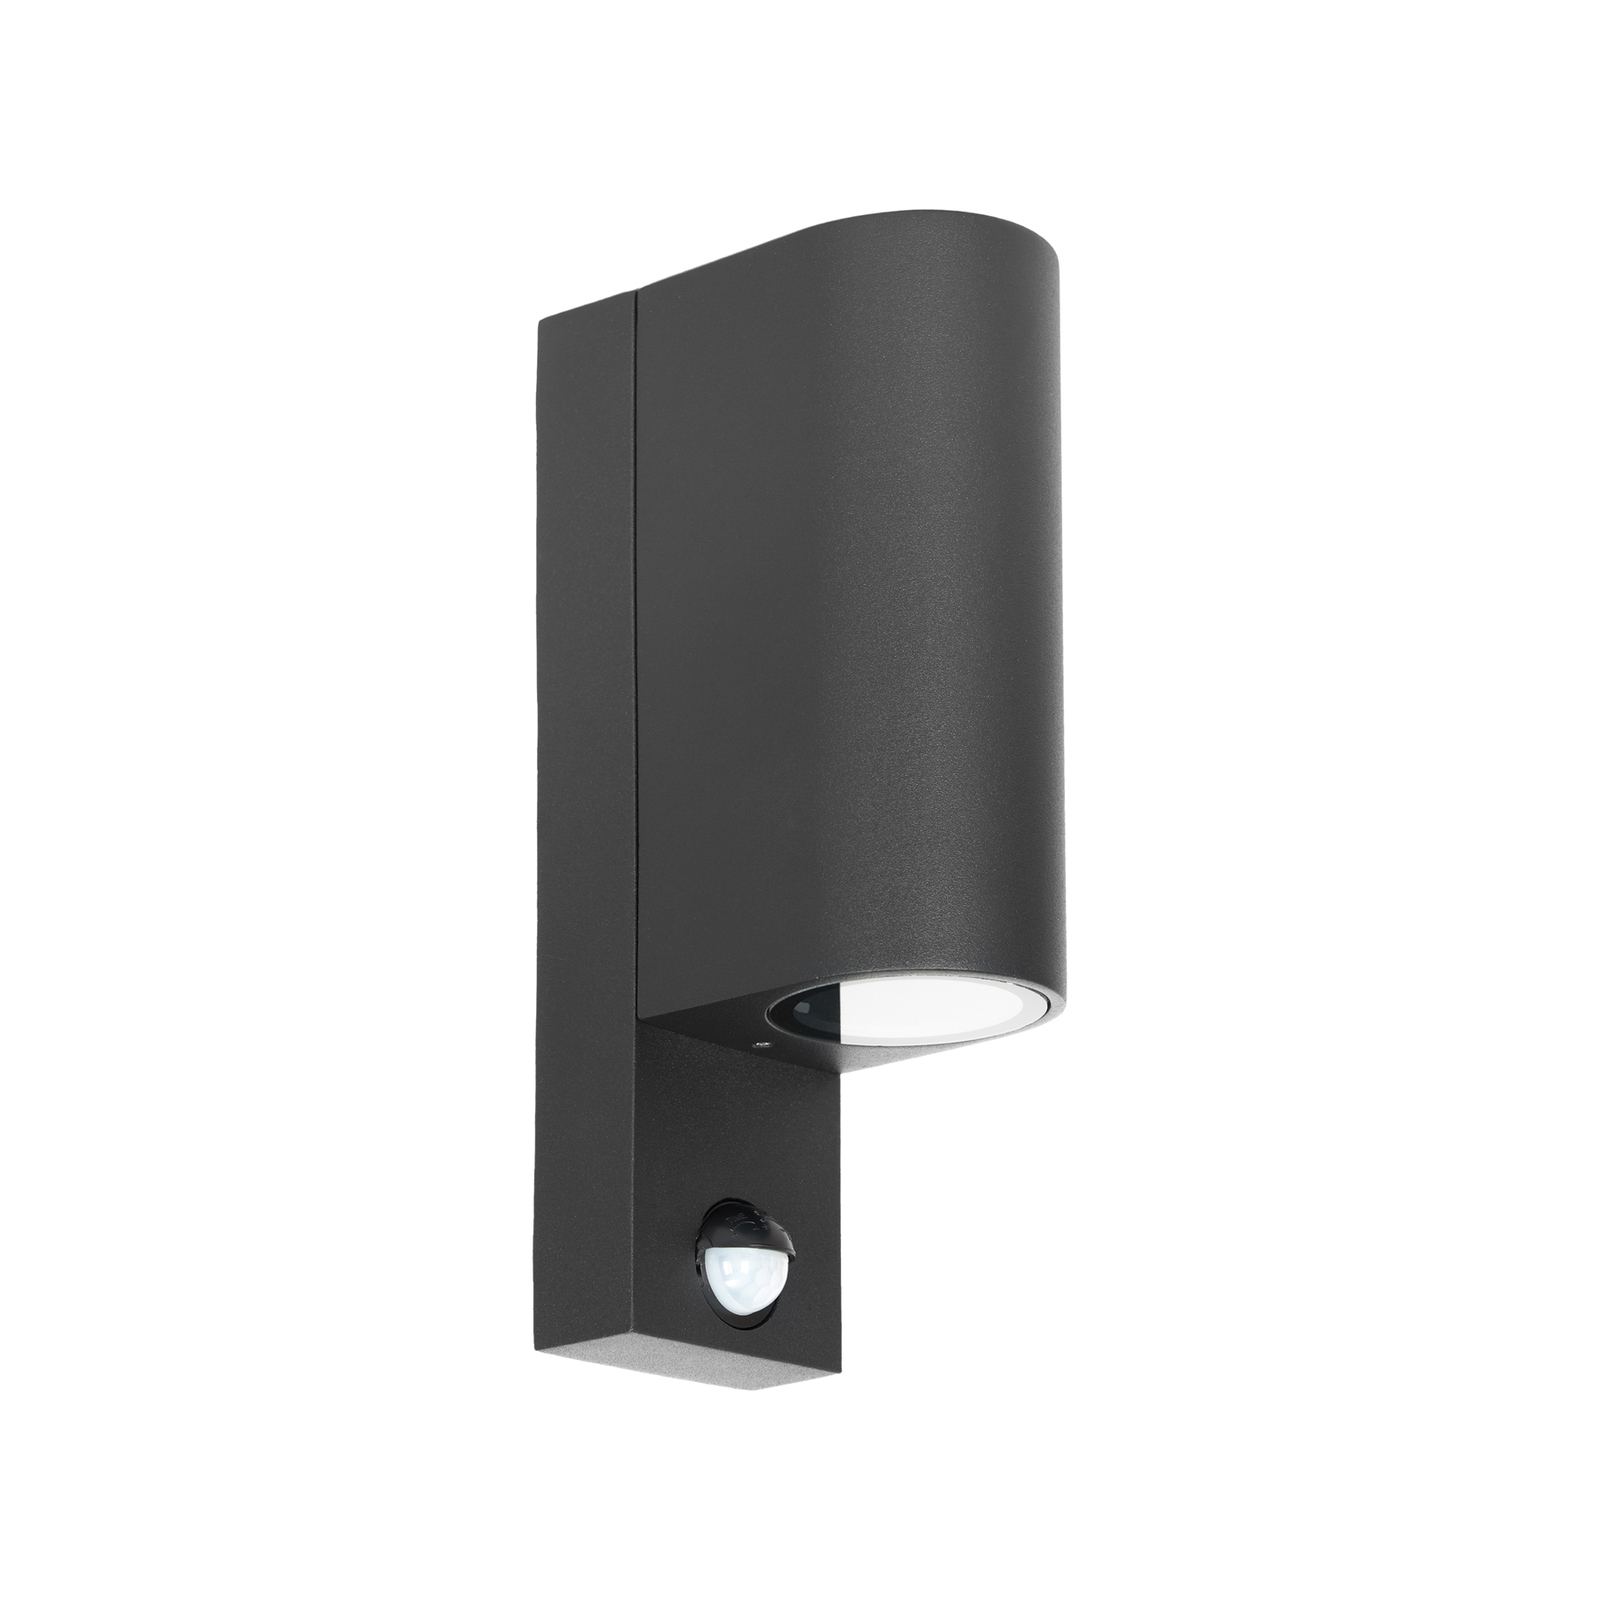 Prios outdoor wall light Tetje, black, round, sensor